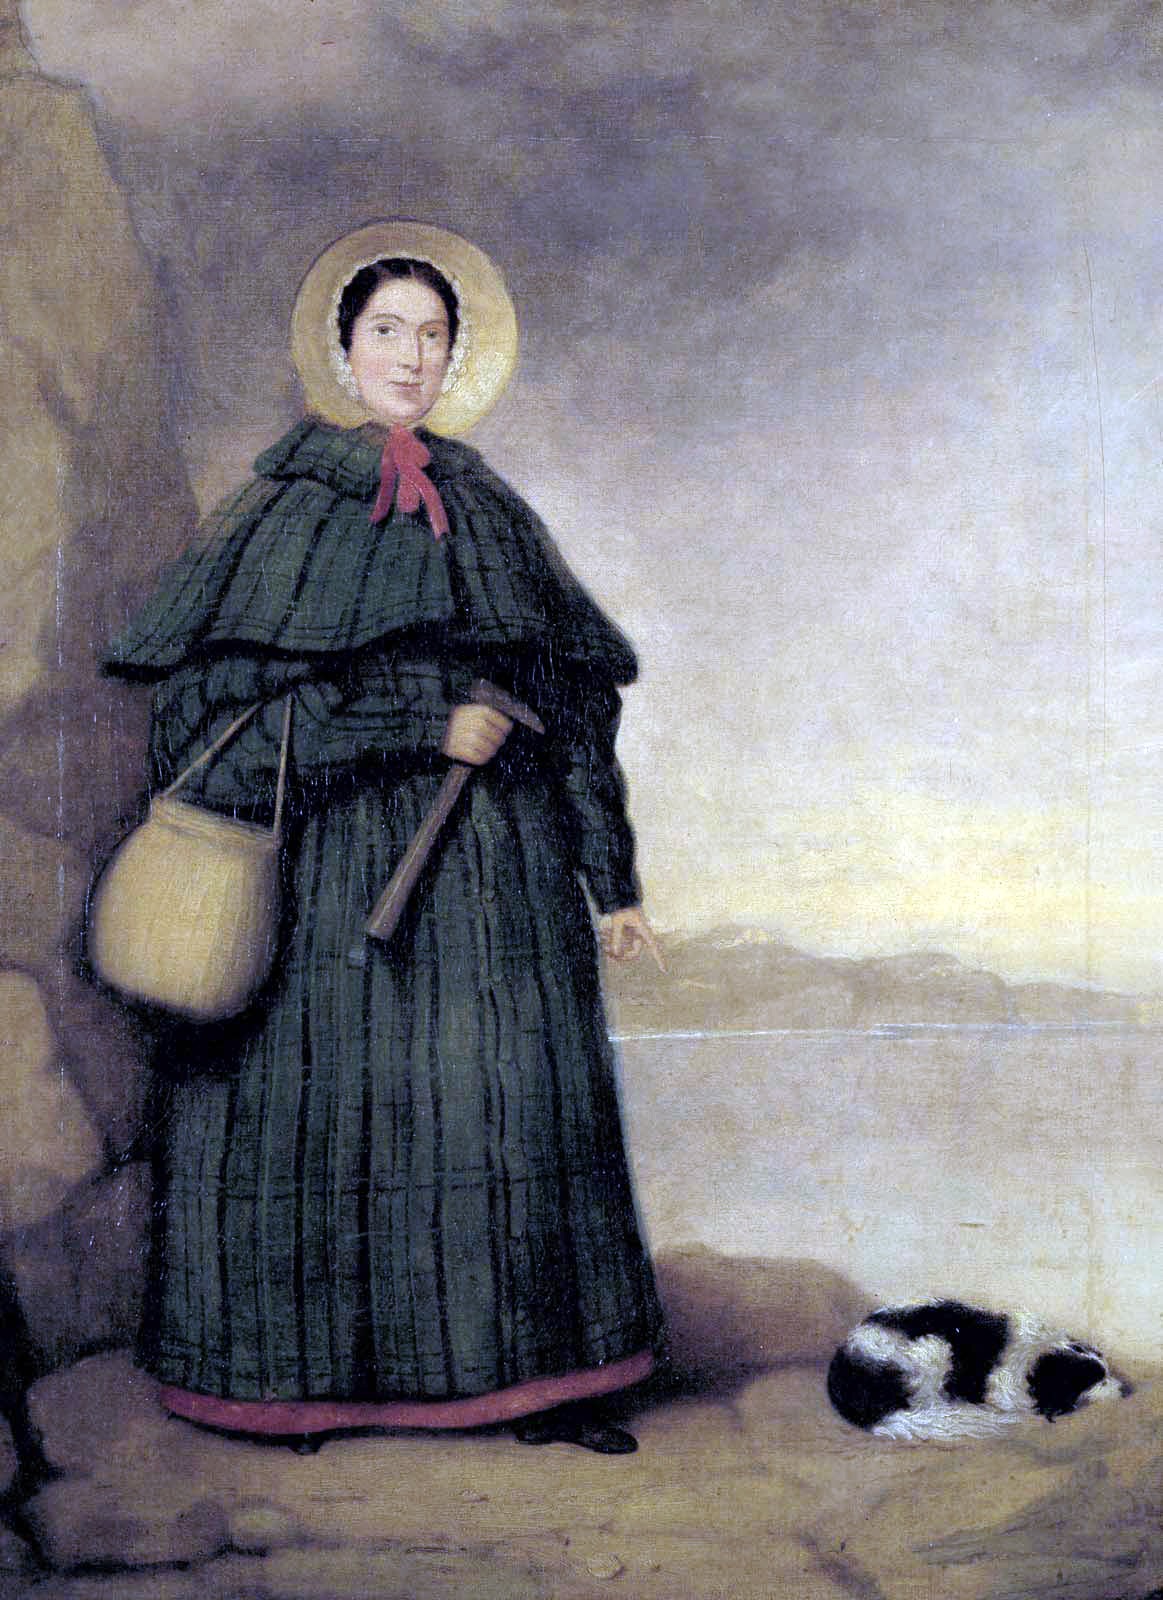 Retrato de Mary Anning, paleontóloga inglesa, com seu cachorro Tray.  (Foto: Sedgwick Museum / Creative Commons)